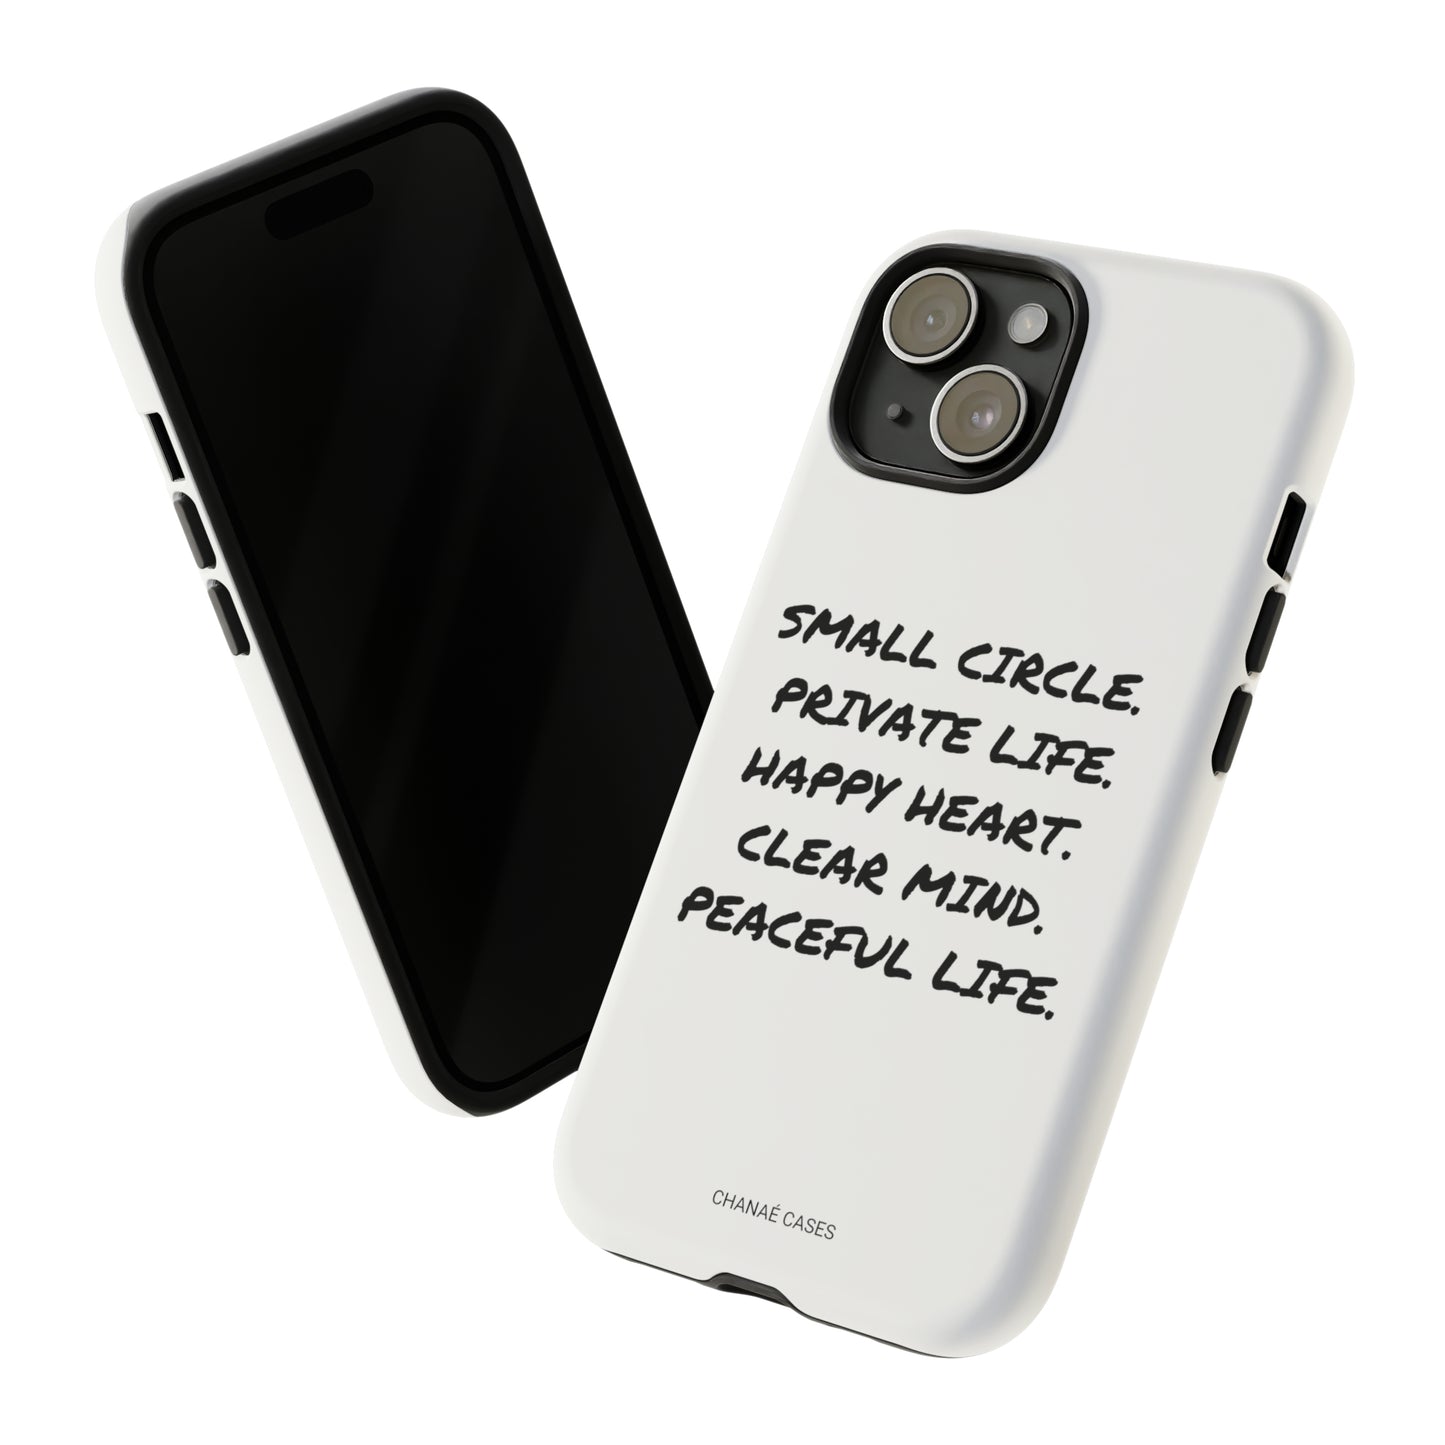 Peaceful Life iPhone "Tough" Case (White)